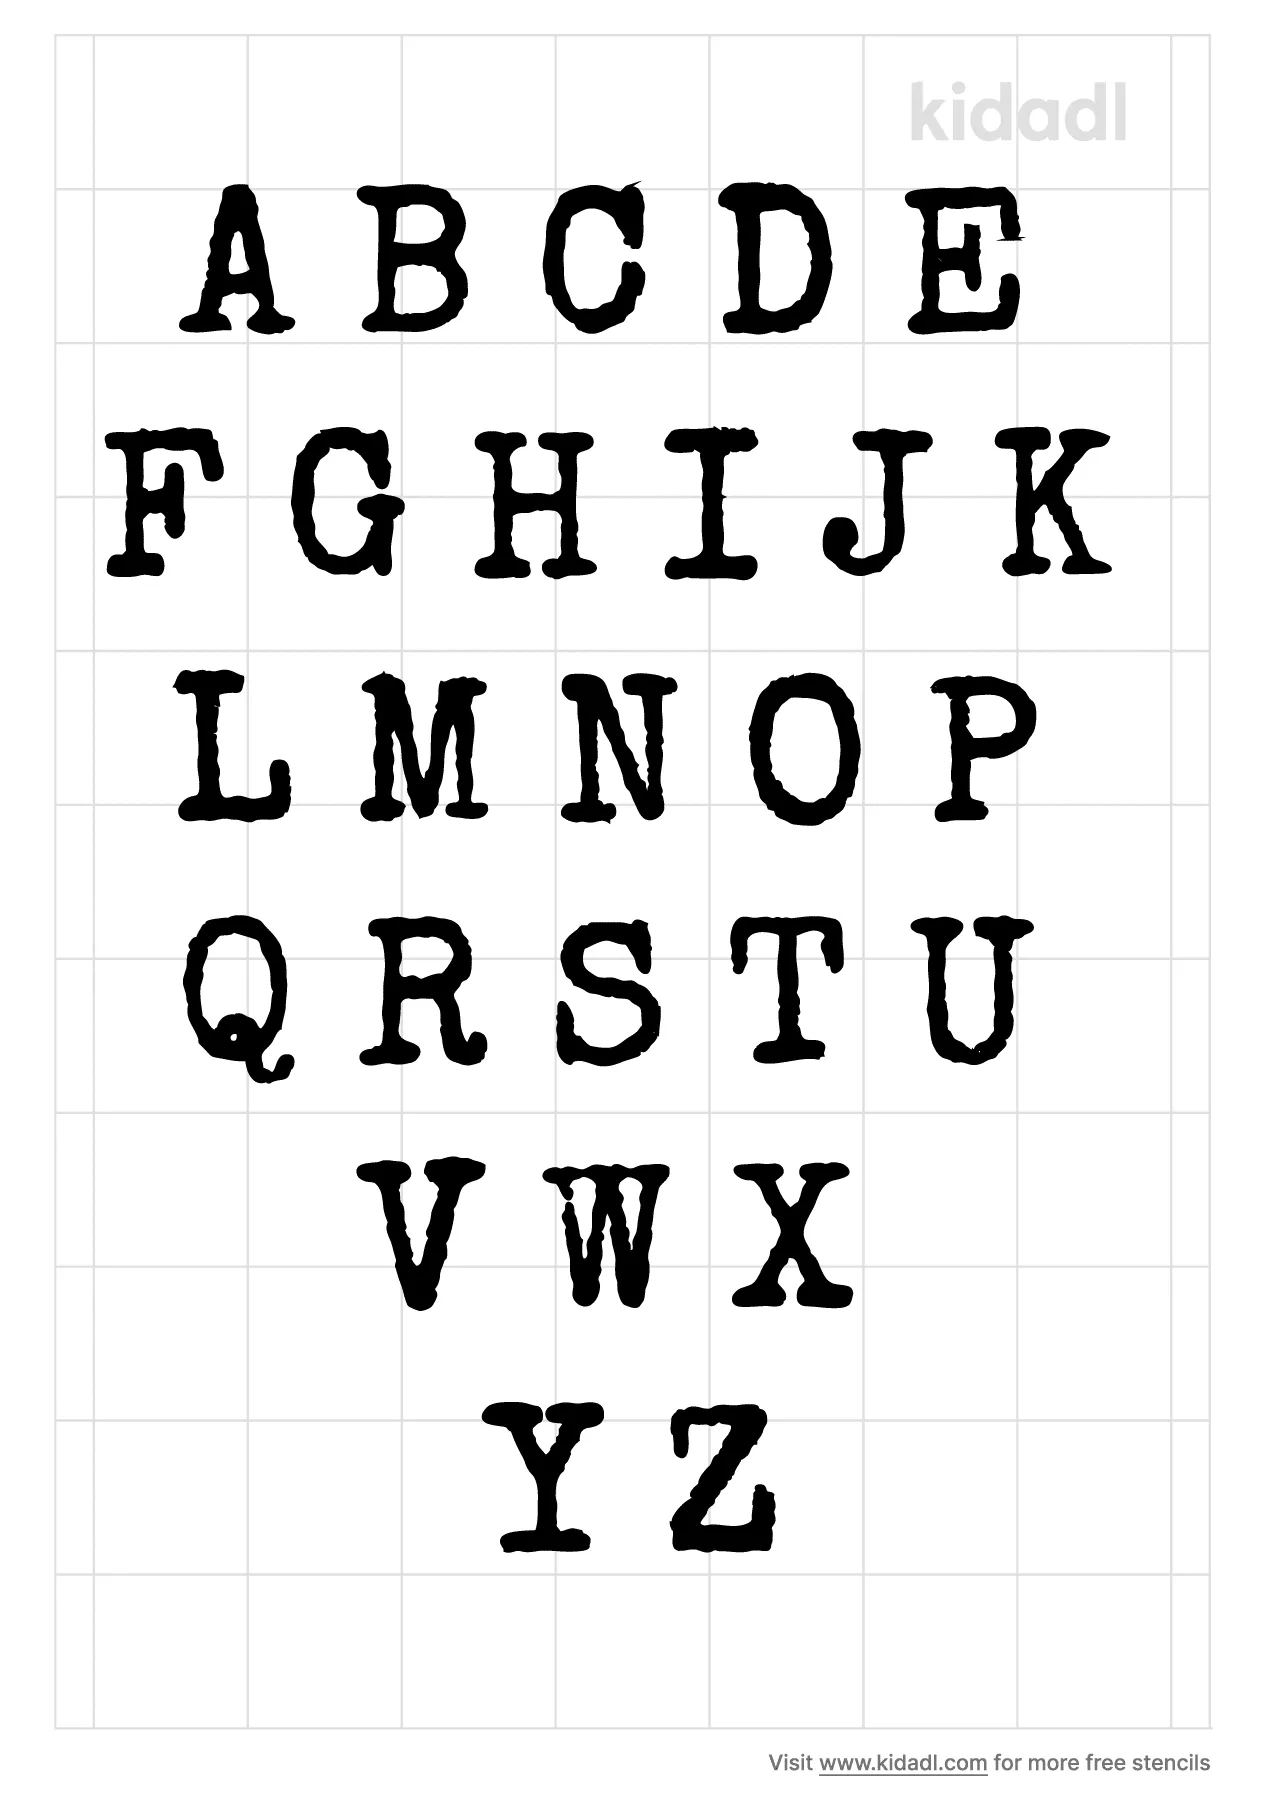 alphabet vintage letter stencils free printable letters stencils kidadl and letters stencils free printable stencils kidadl